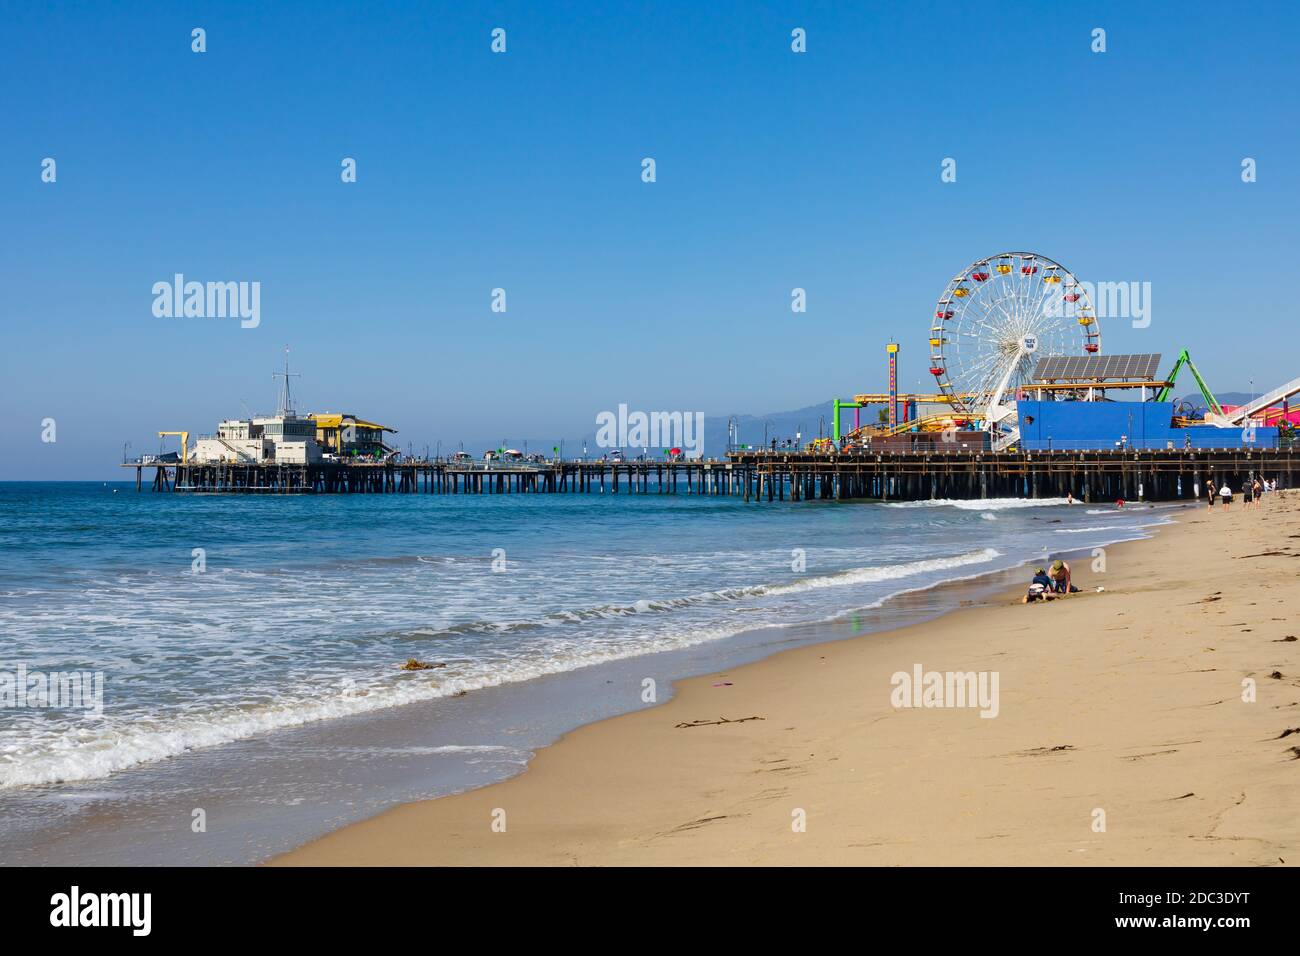 Pier and beach, Santa Monica, California, United States of America Stock Photo